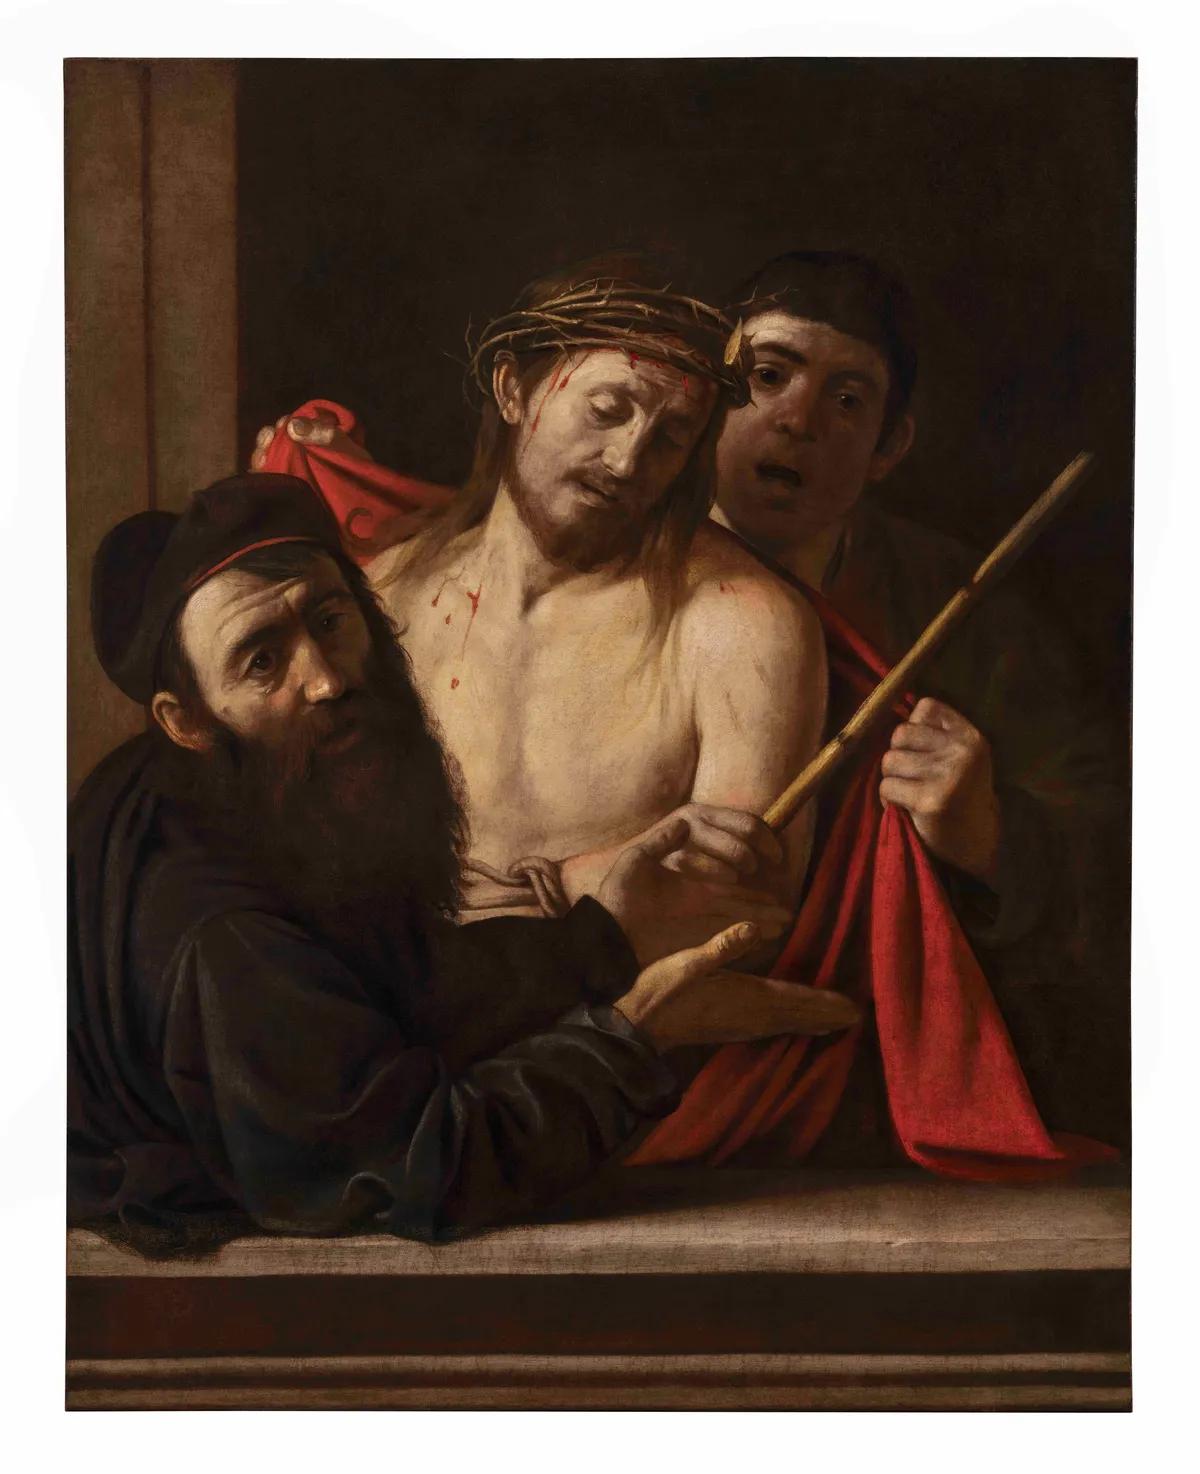 Michelangelo Merisi (dit Le Caravage), Ecce Homo, vers 1605-1609. Courtesy collection privée